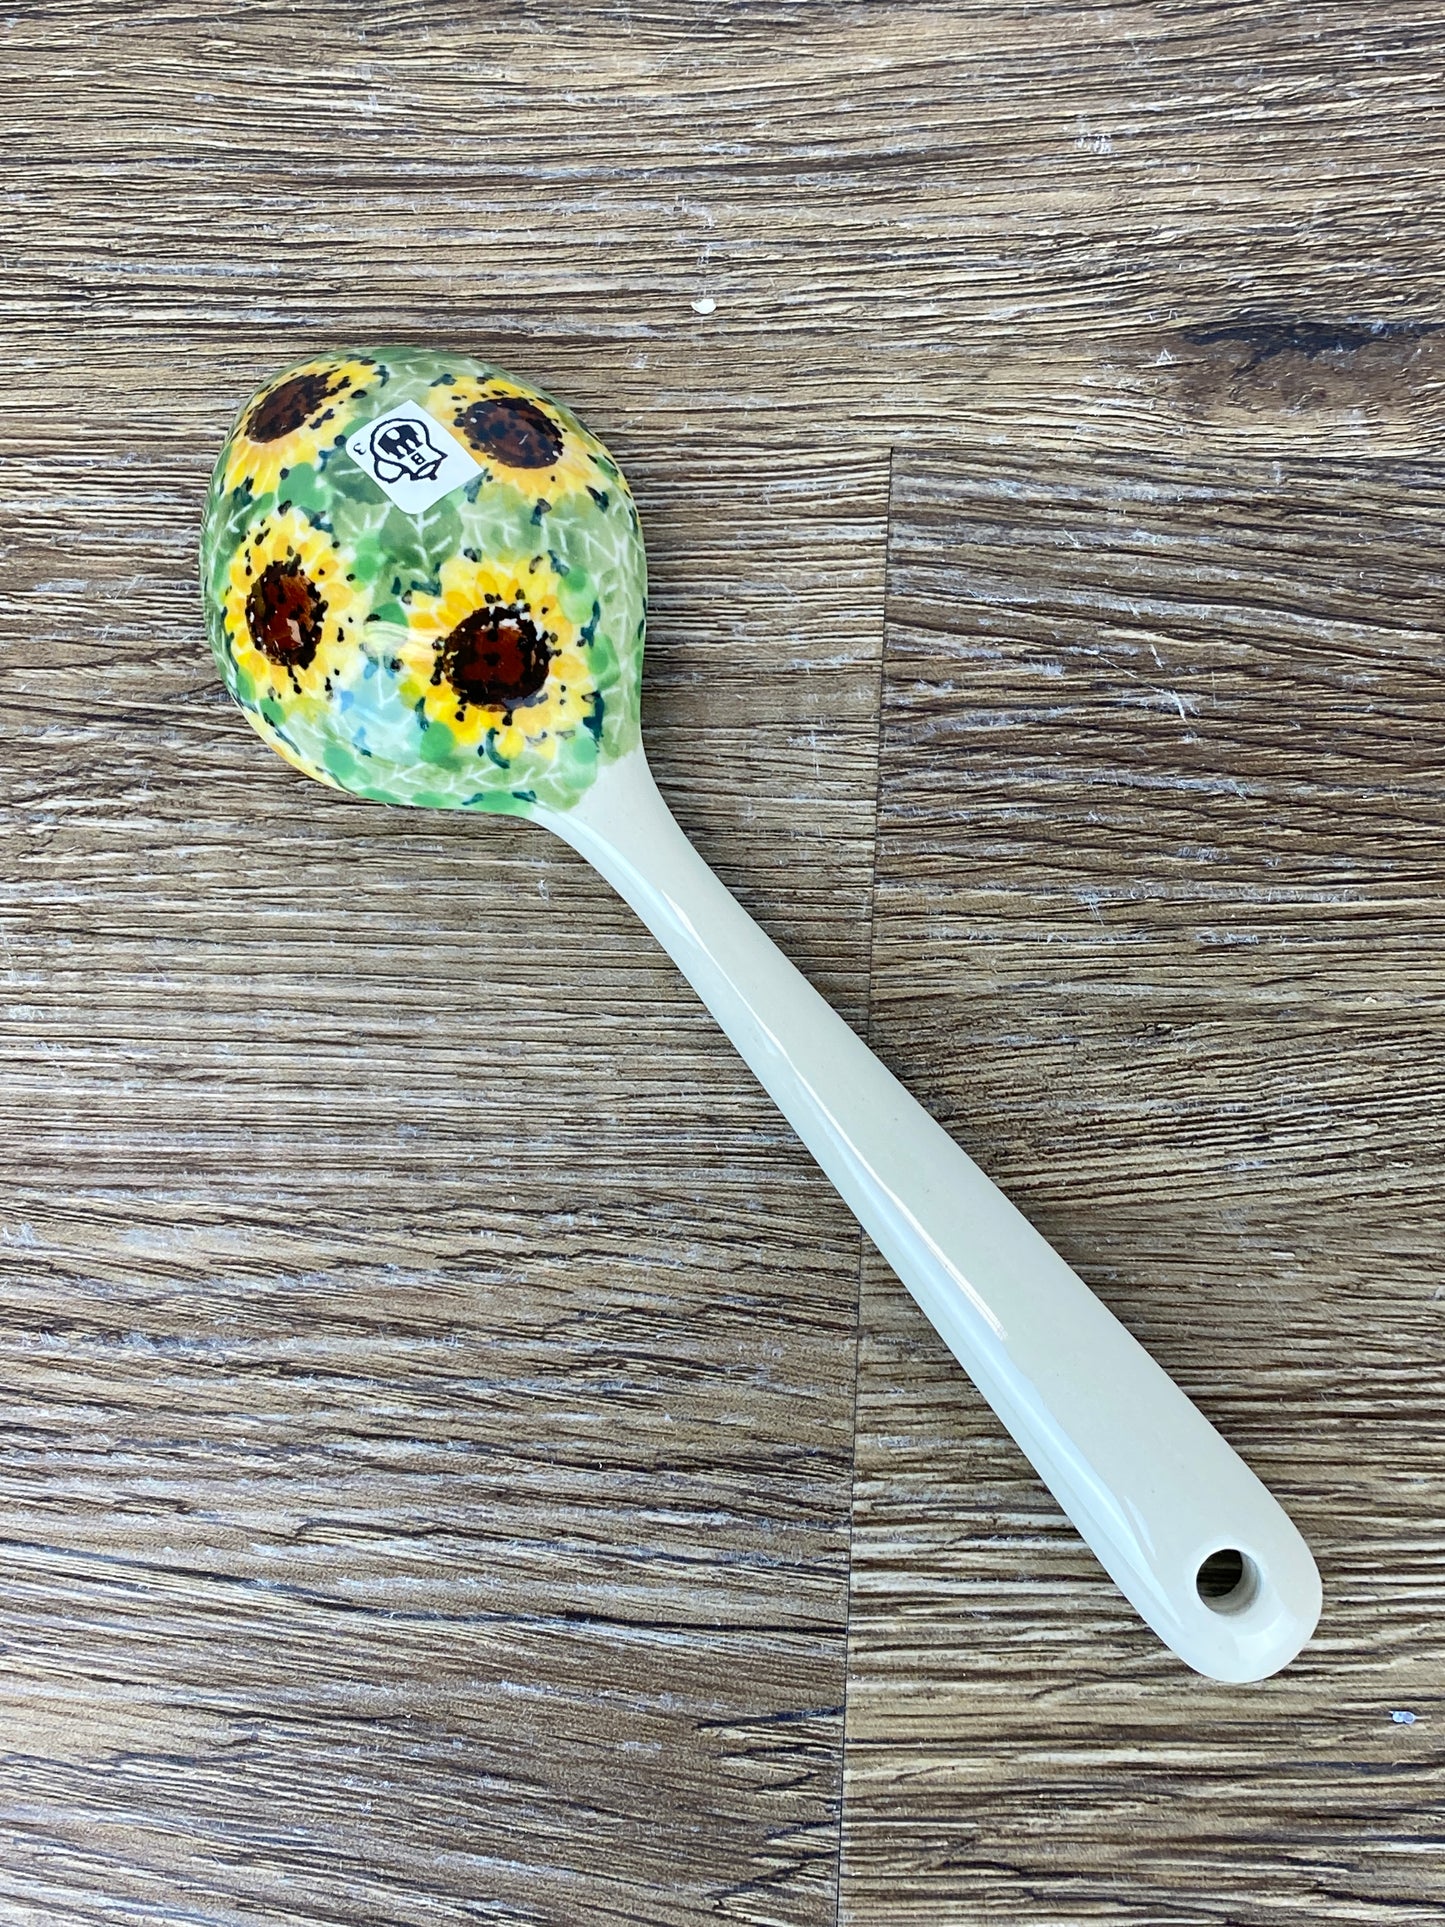 Small Unikat Serving Spoon - Shape 591 - Pattern U4737